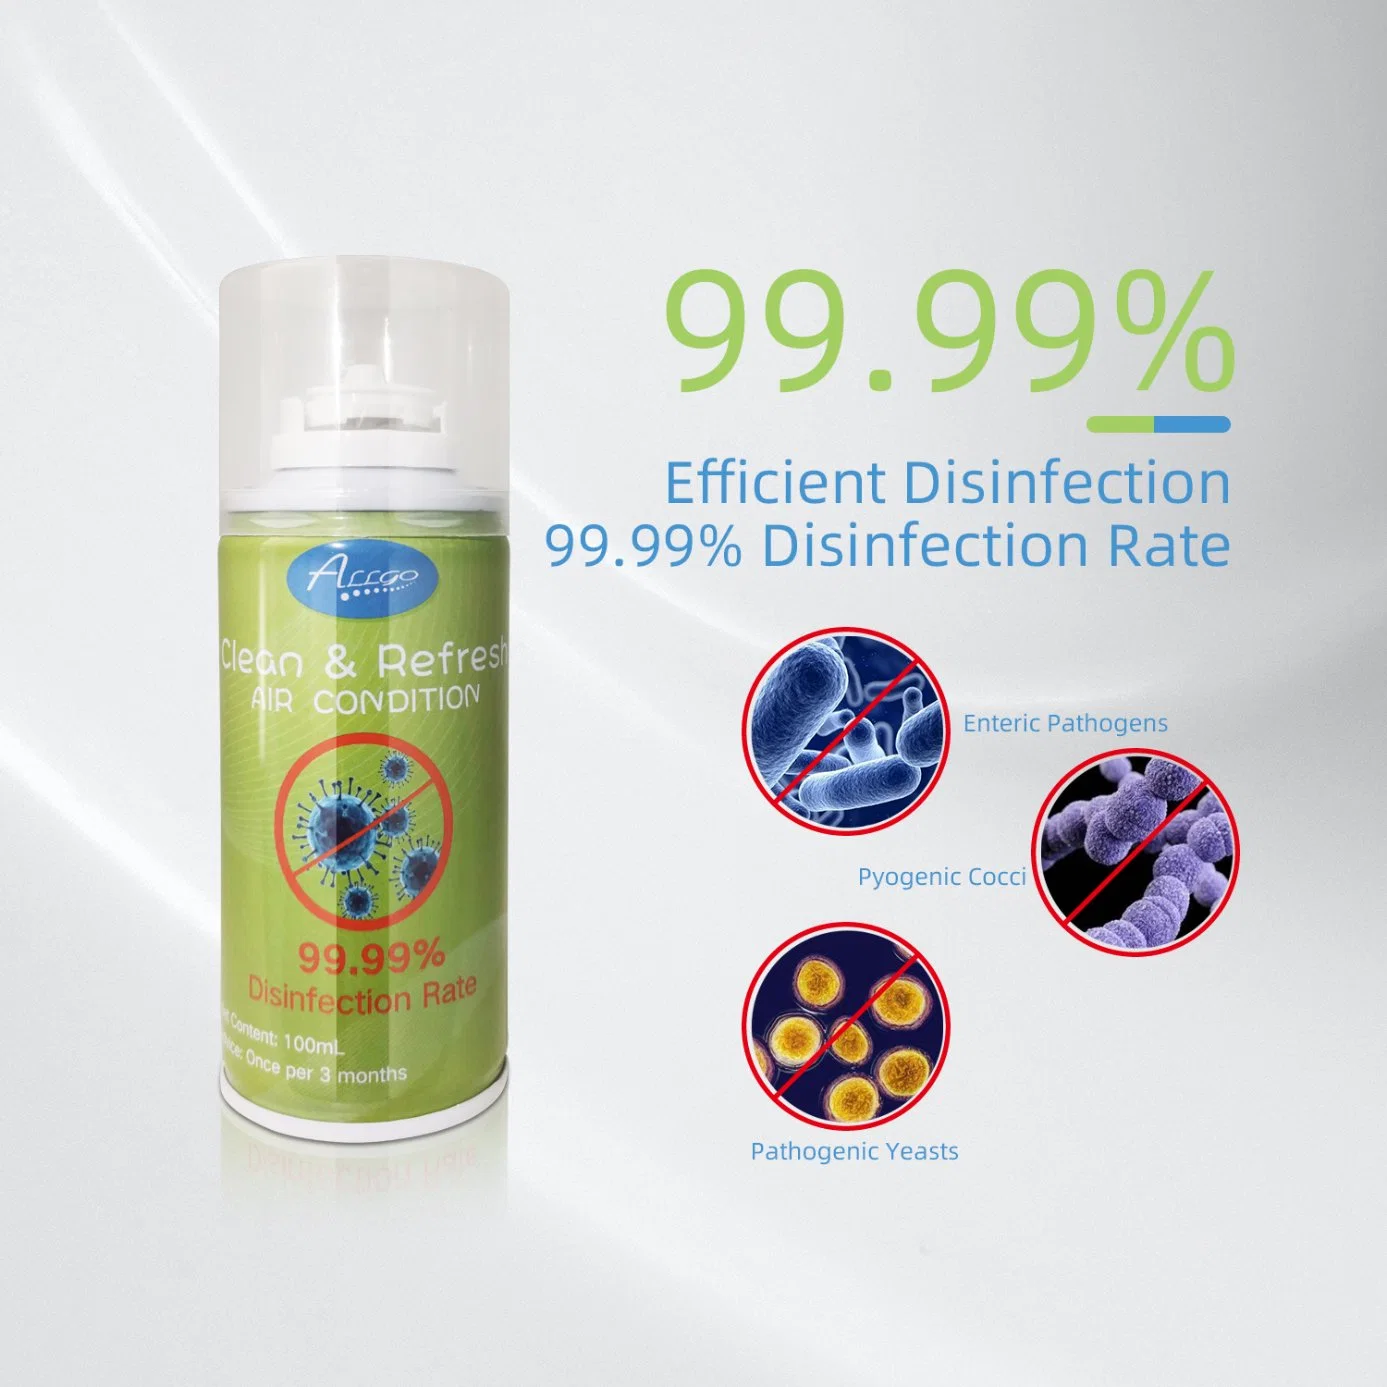 99.99% Aerosol Deodorant Disinfectant Sprayer with Reach MSDS Certificate